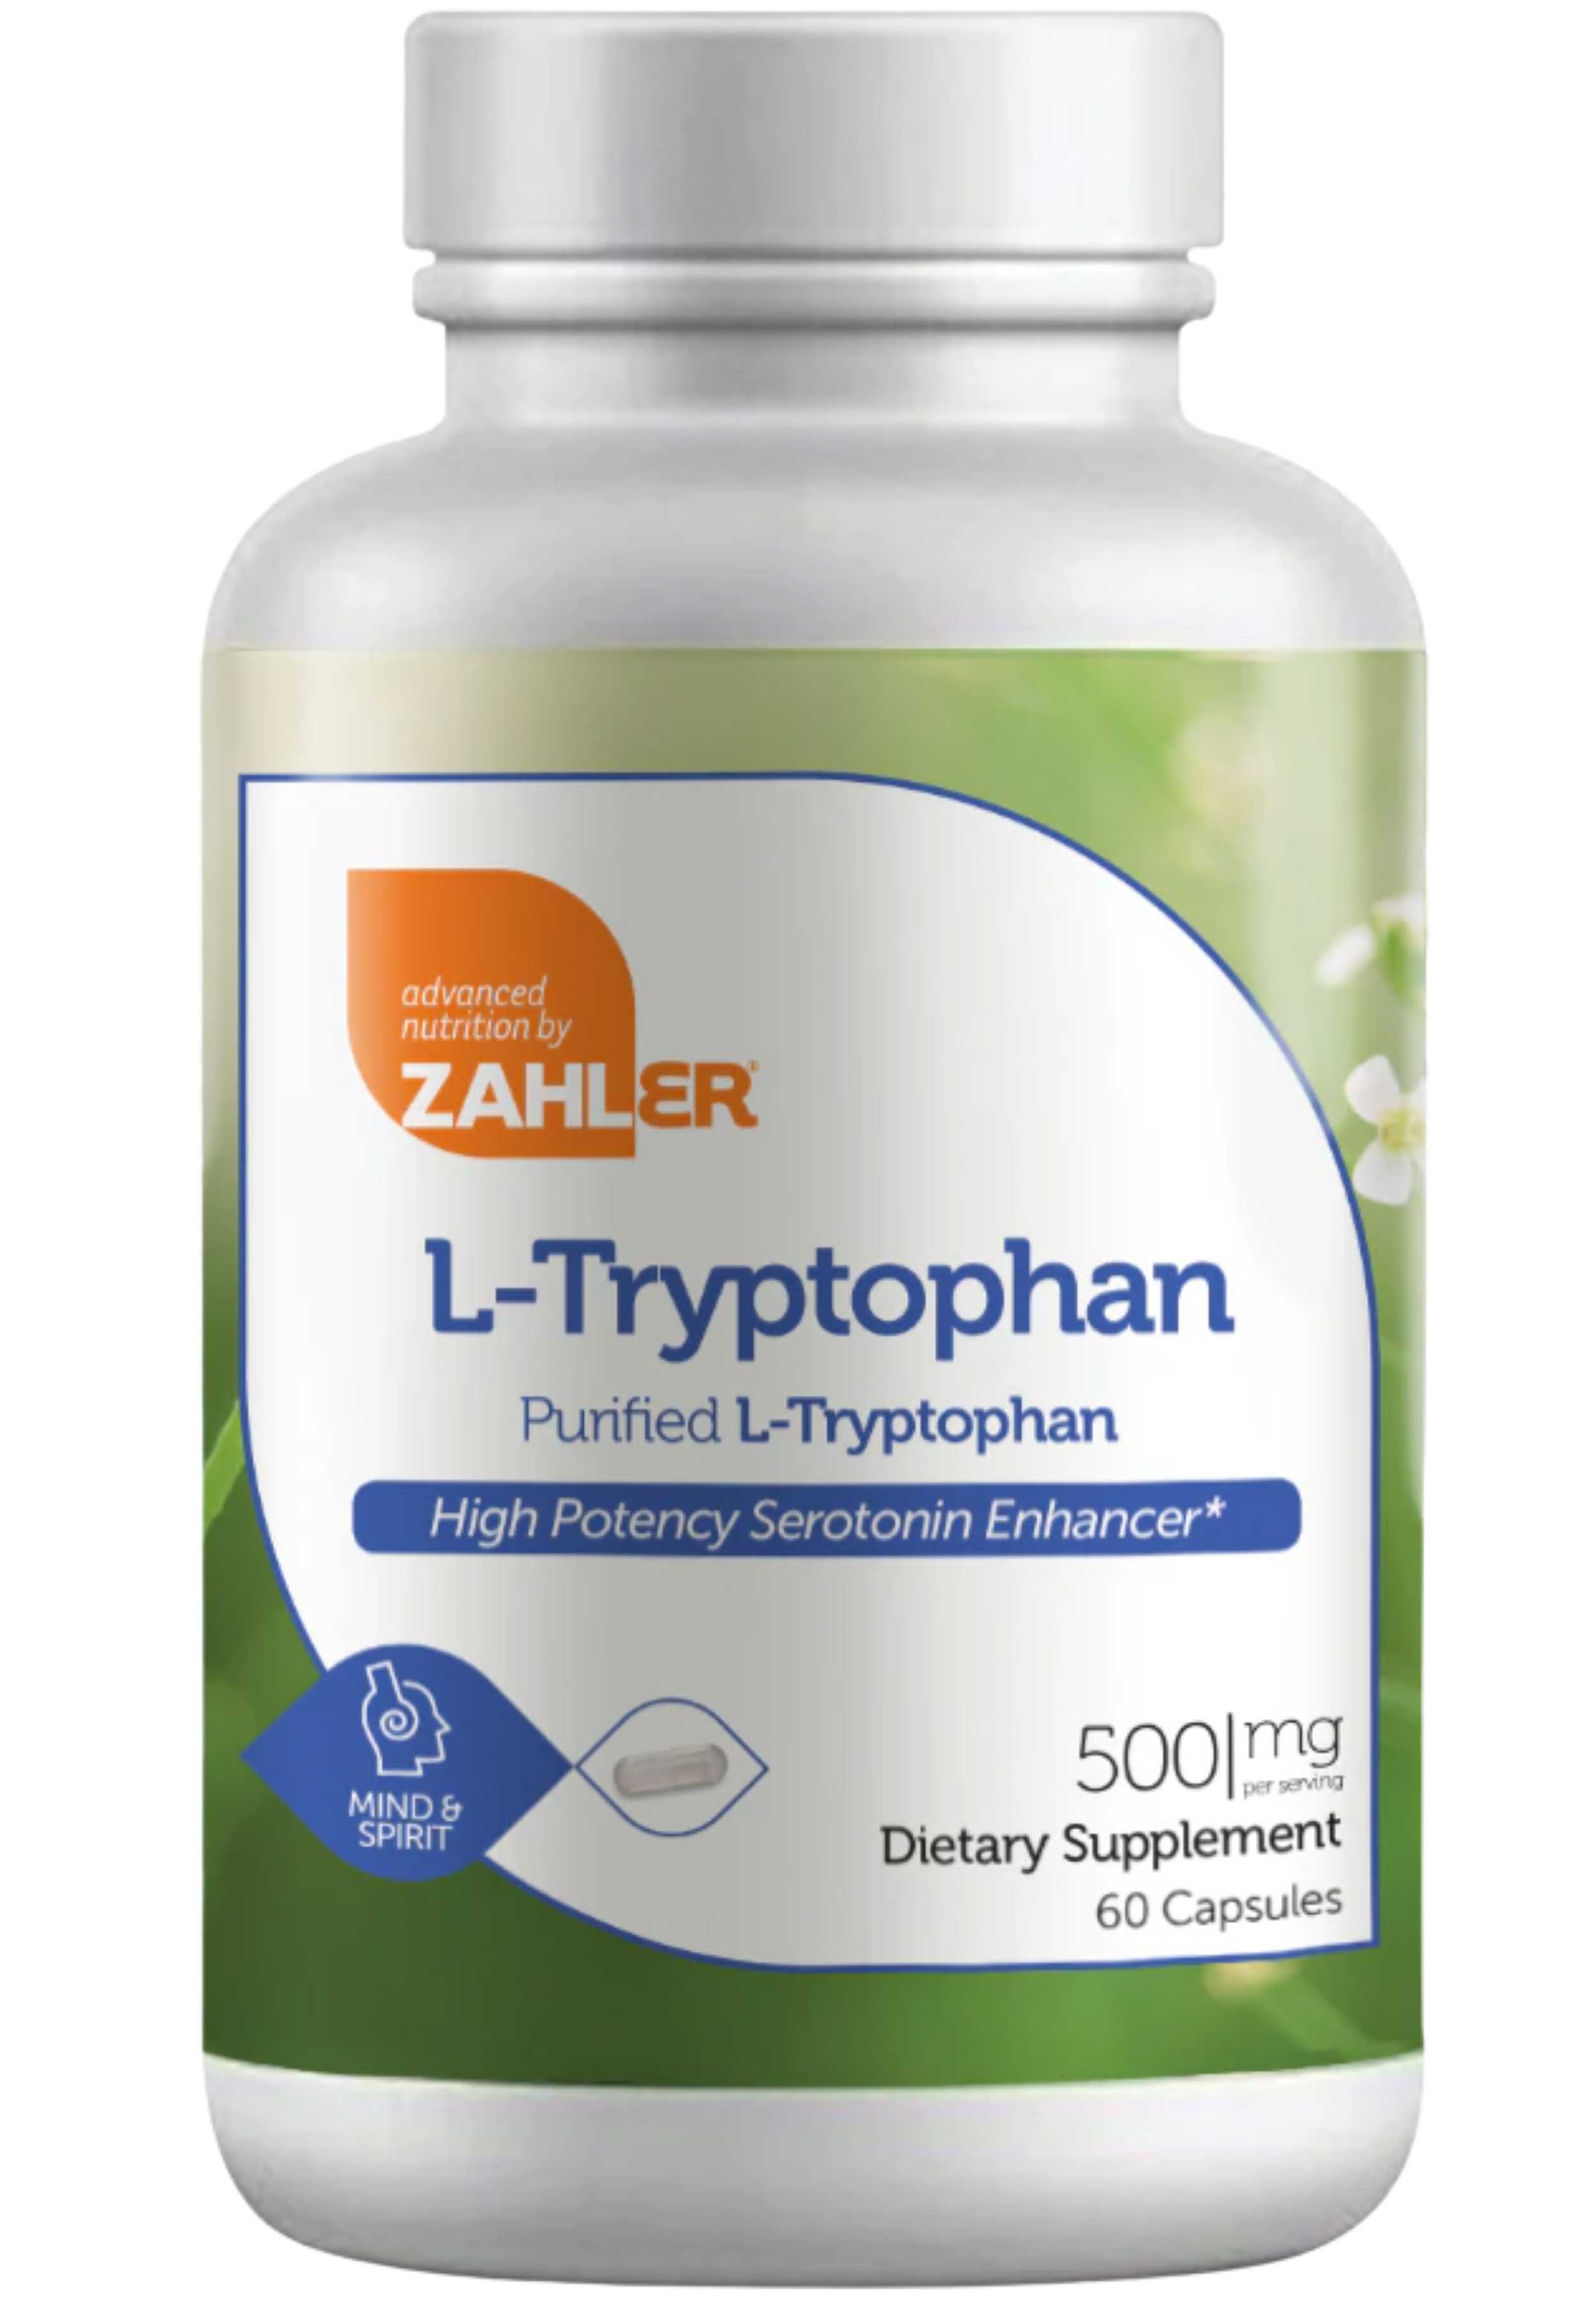 Advanced Nutrition By Zahler L-Tryptophan